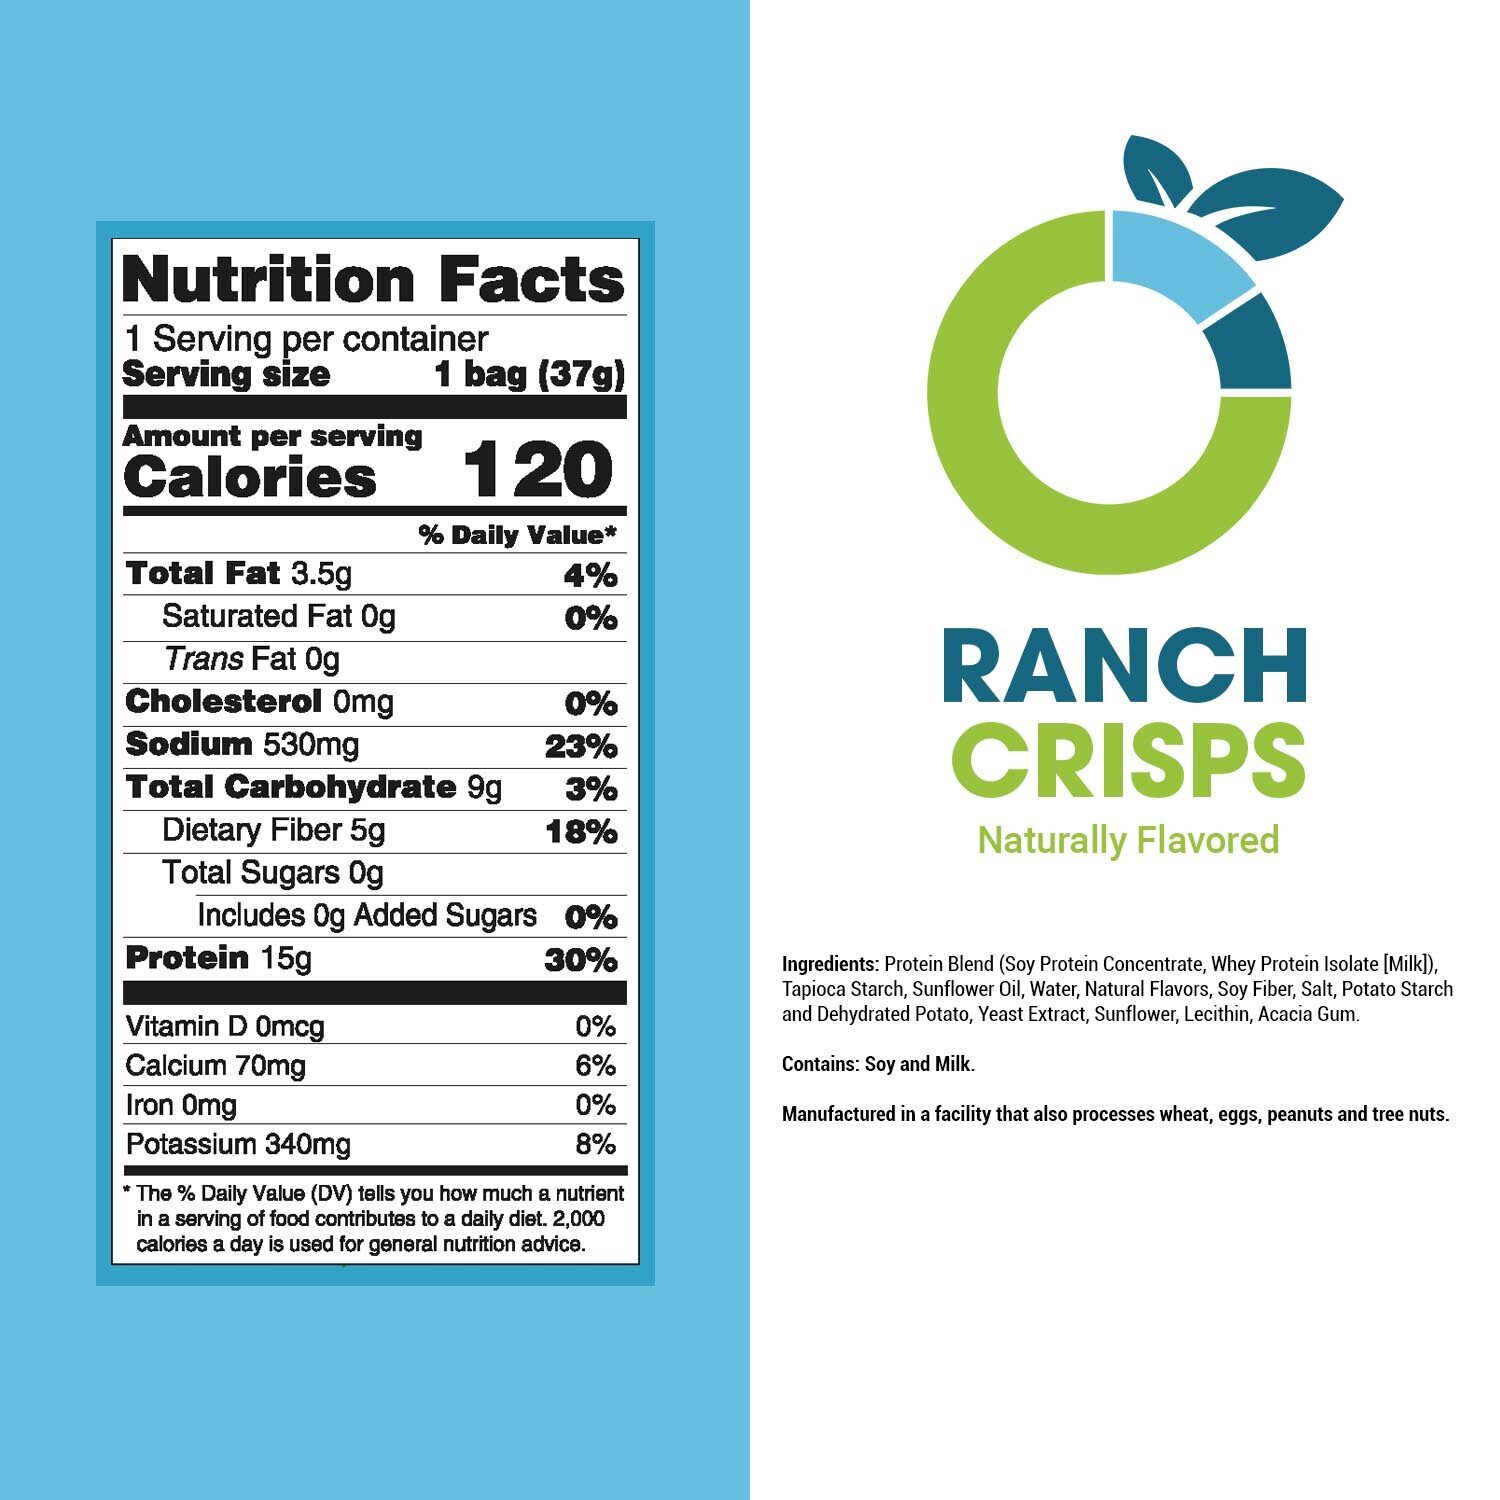 Ranch-Crisps-Panel_05dc05dc0_78712